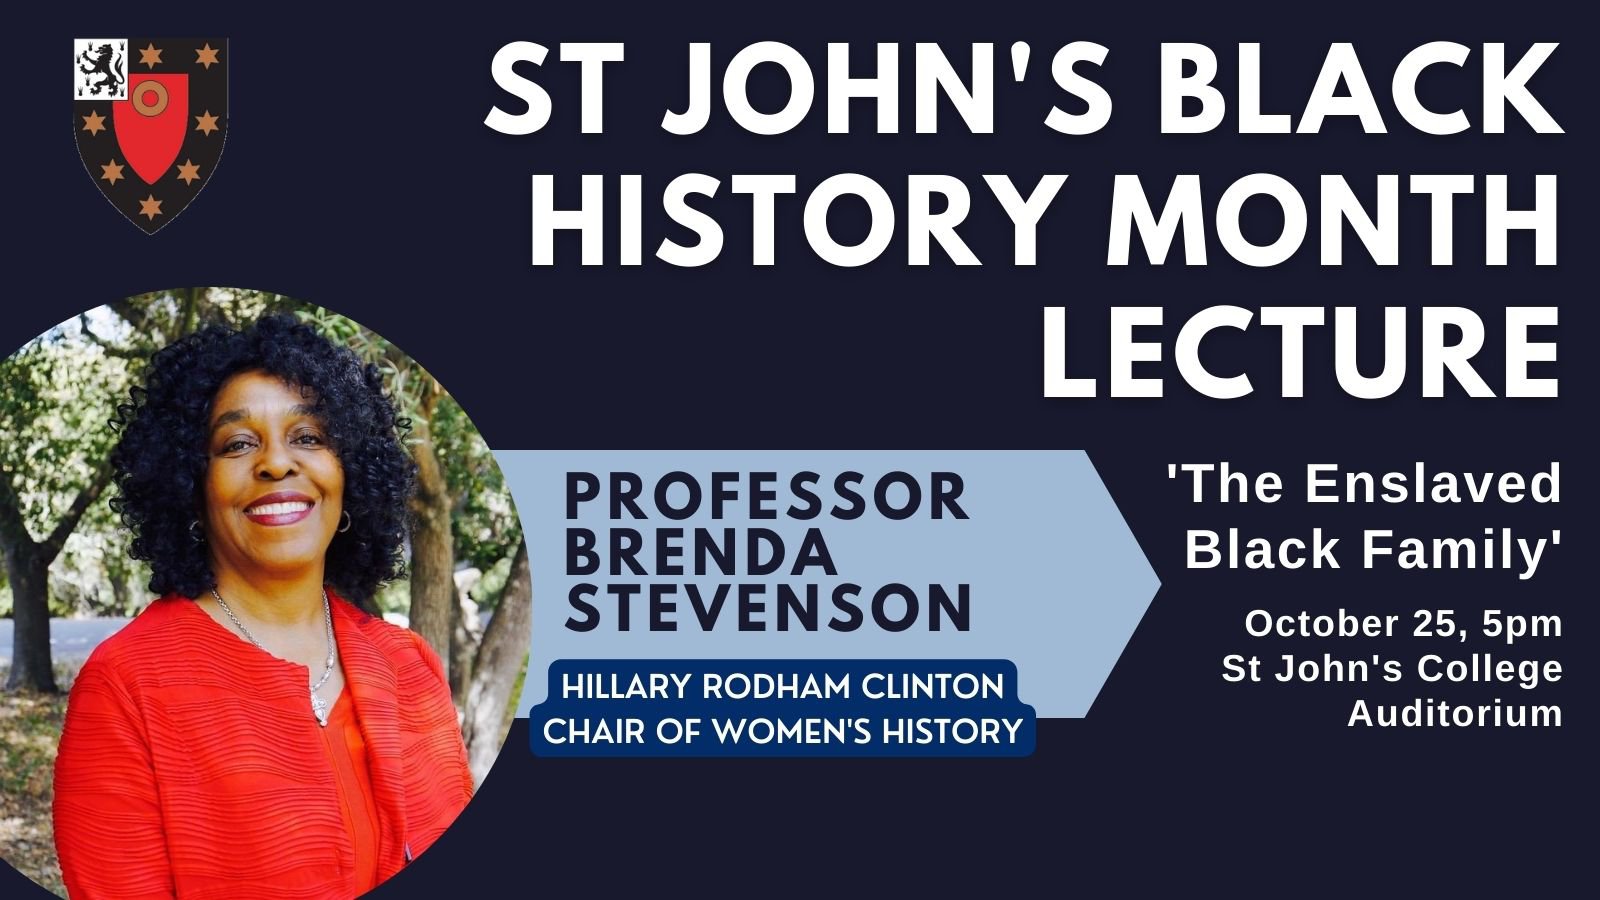 St John's Black History Month Lecture.jpg